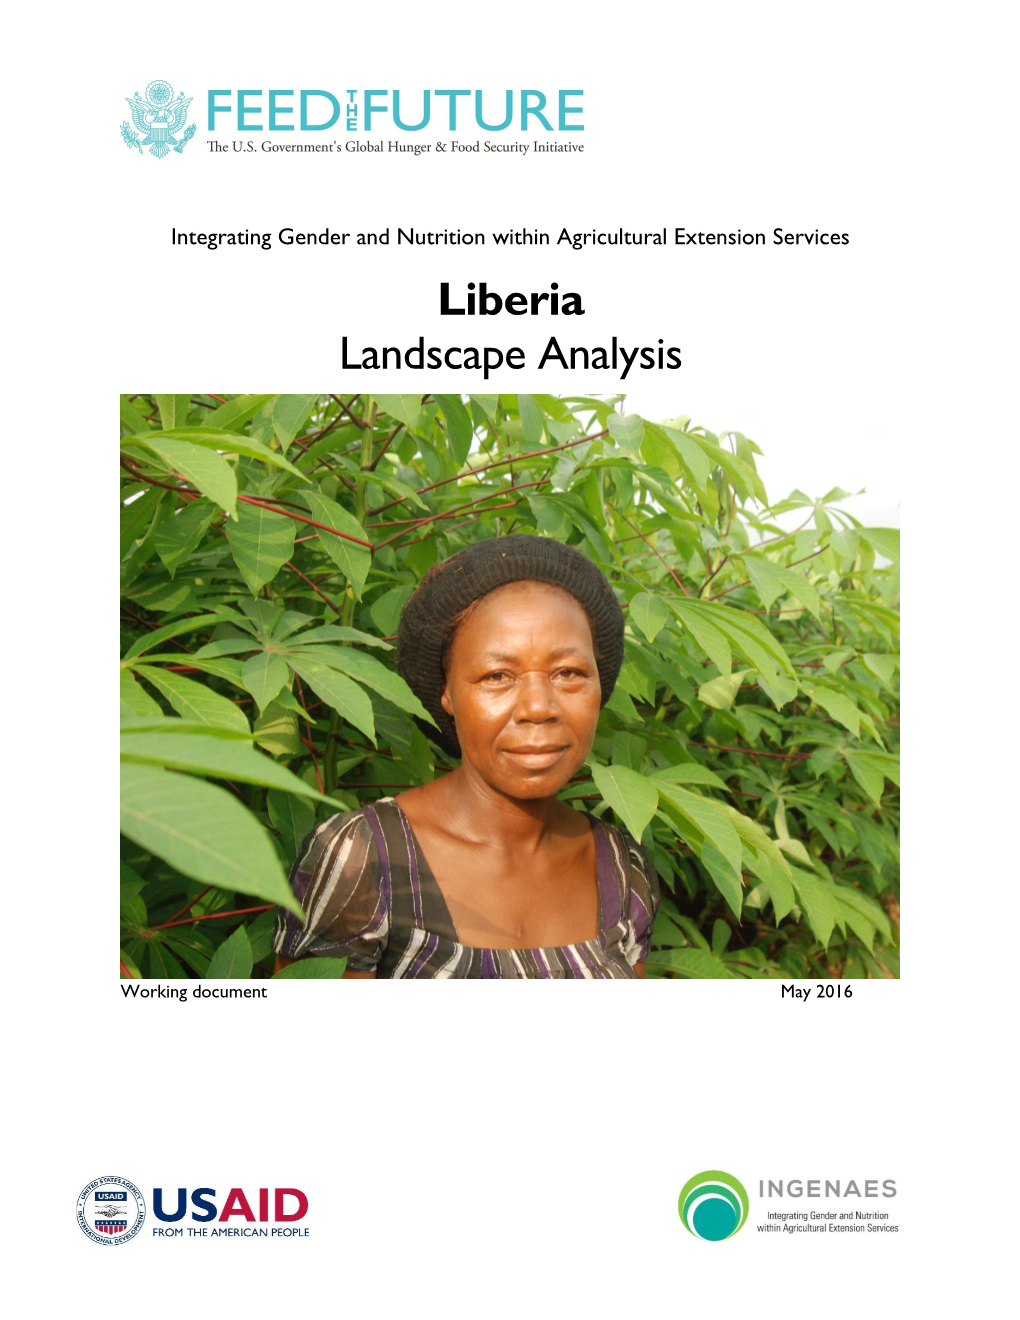 Liberia Landscape Analysis